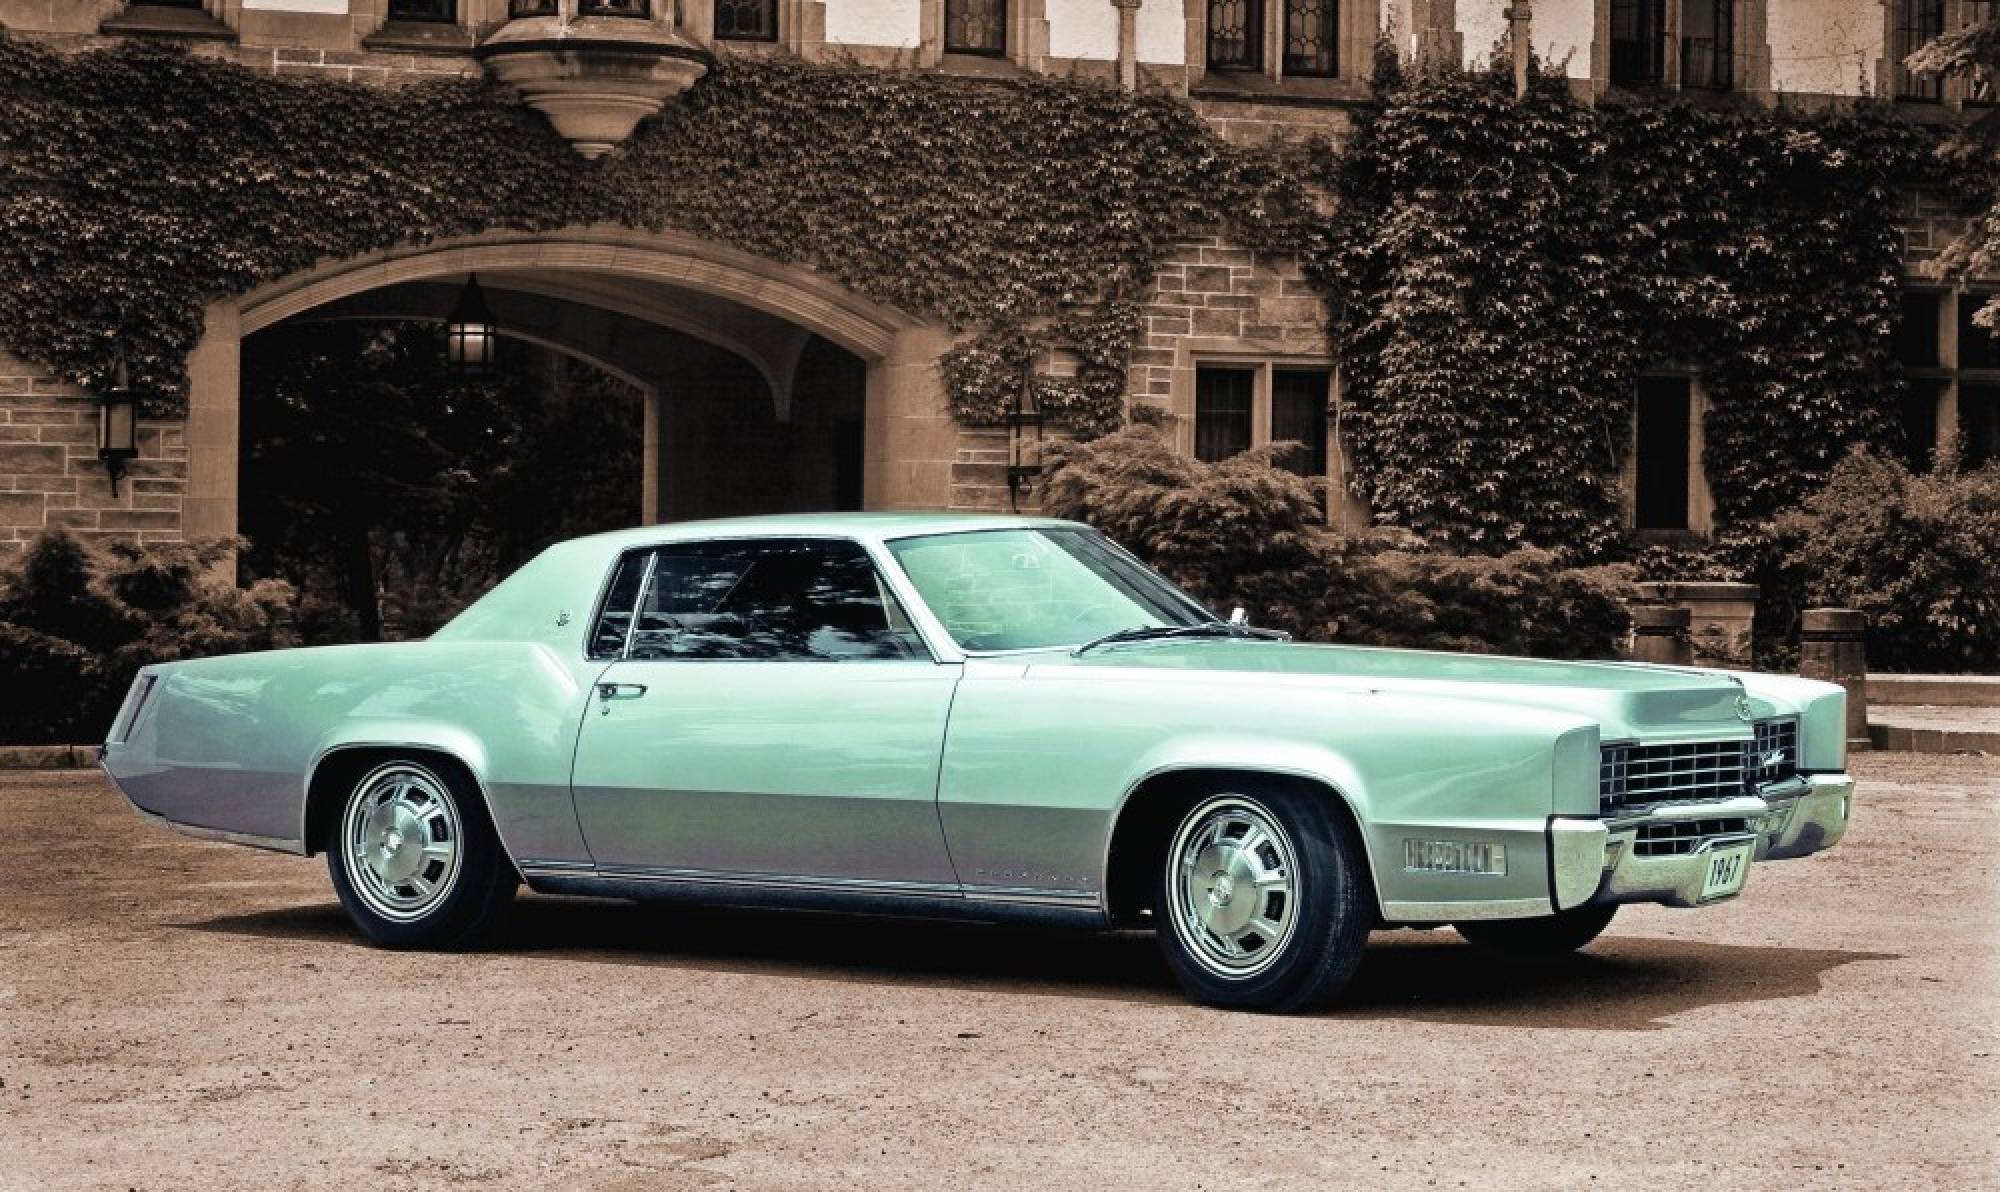 Amazing 1967 Cadillac Eldorado Pictures & Backgrounds